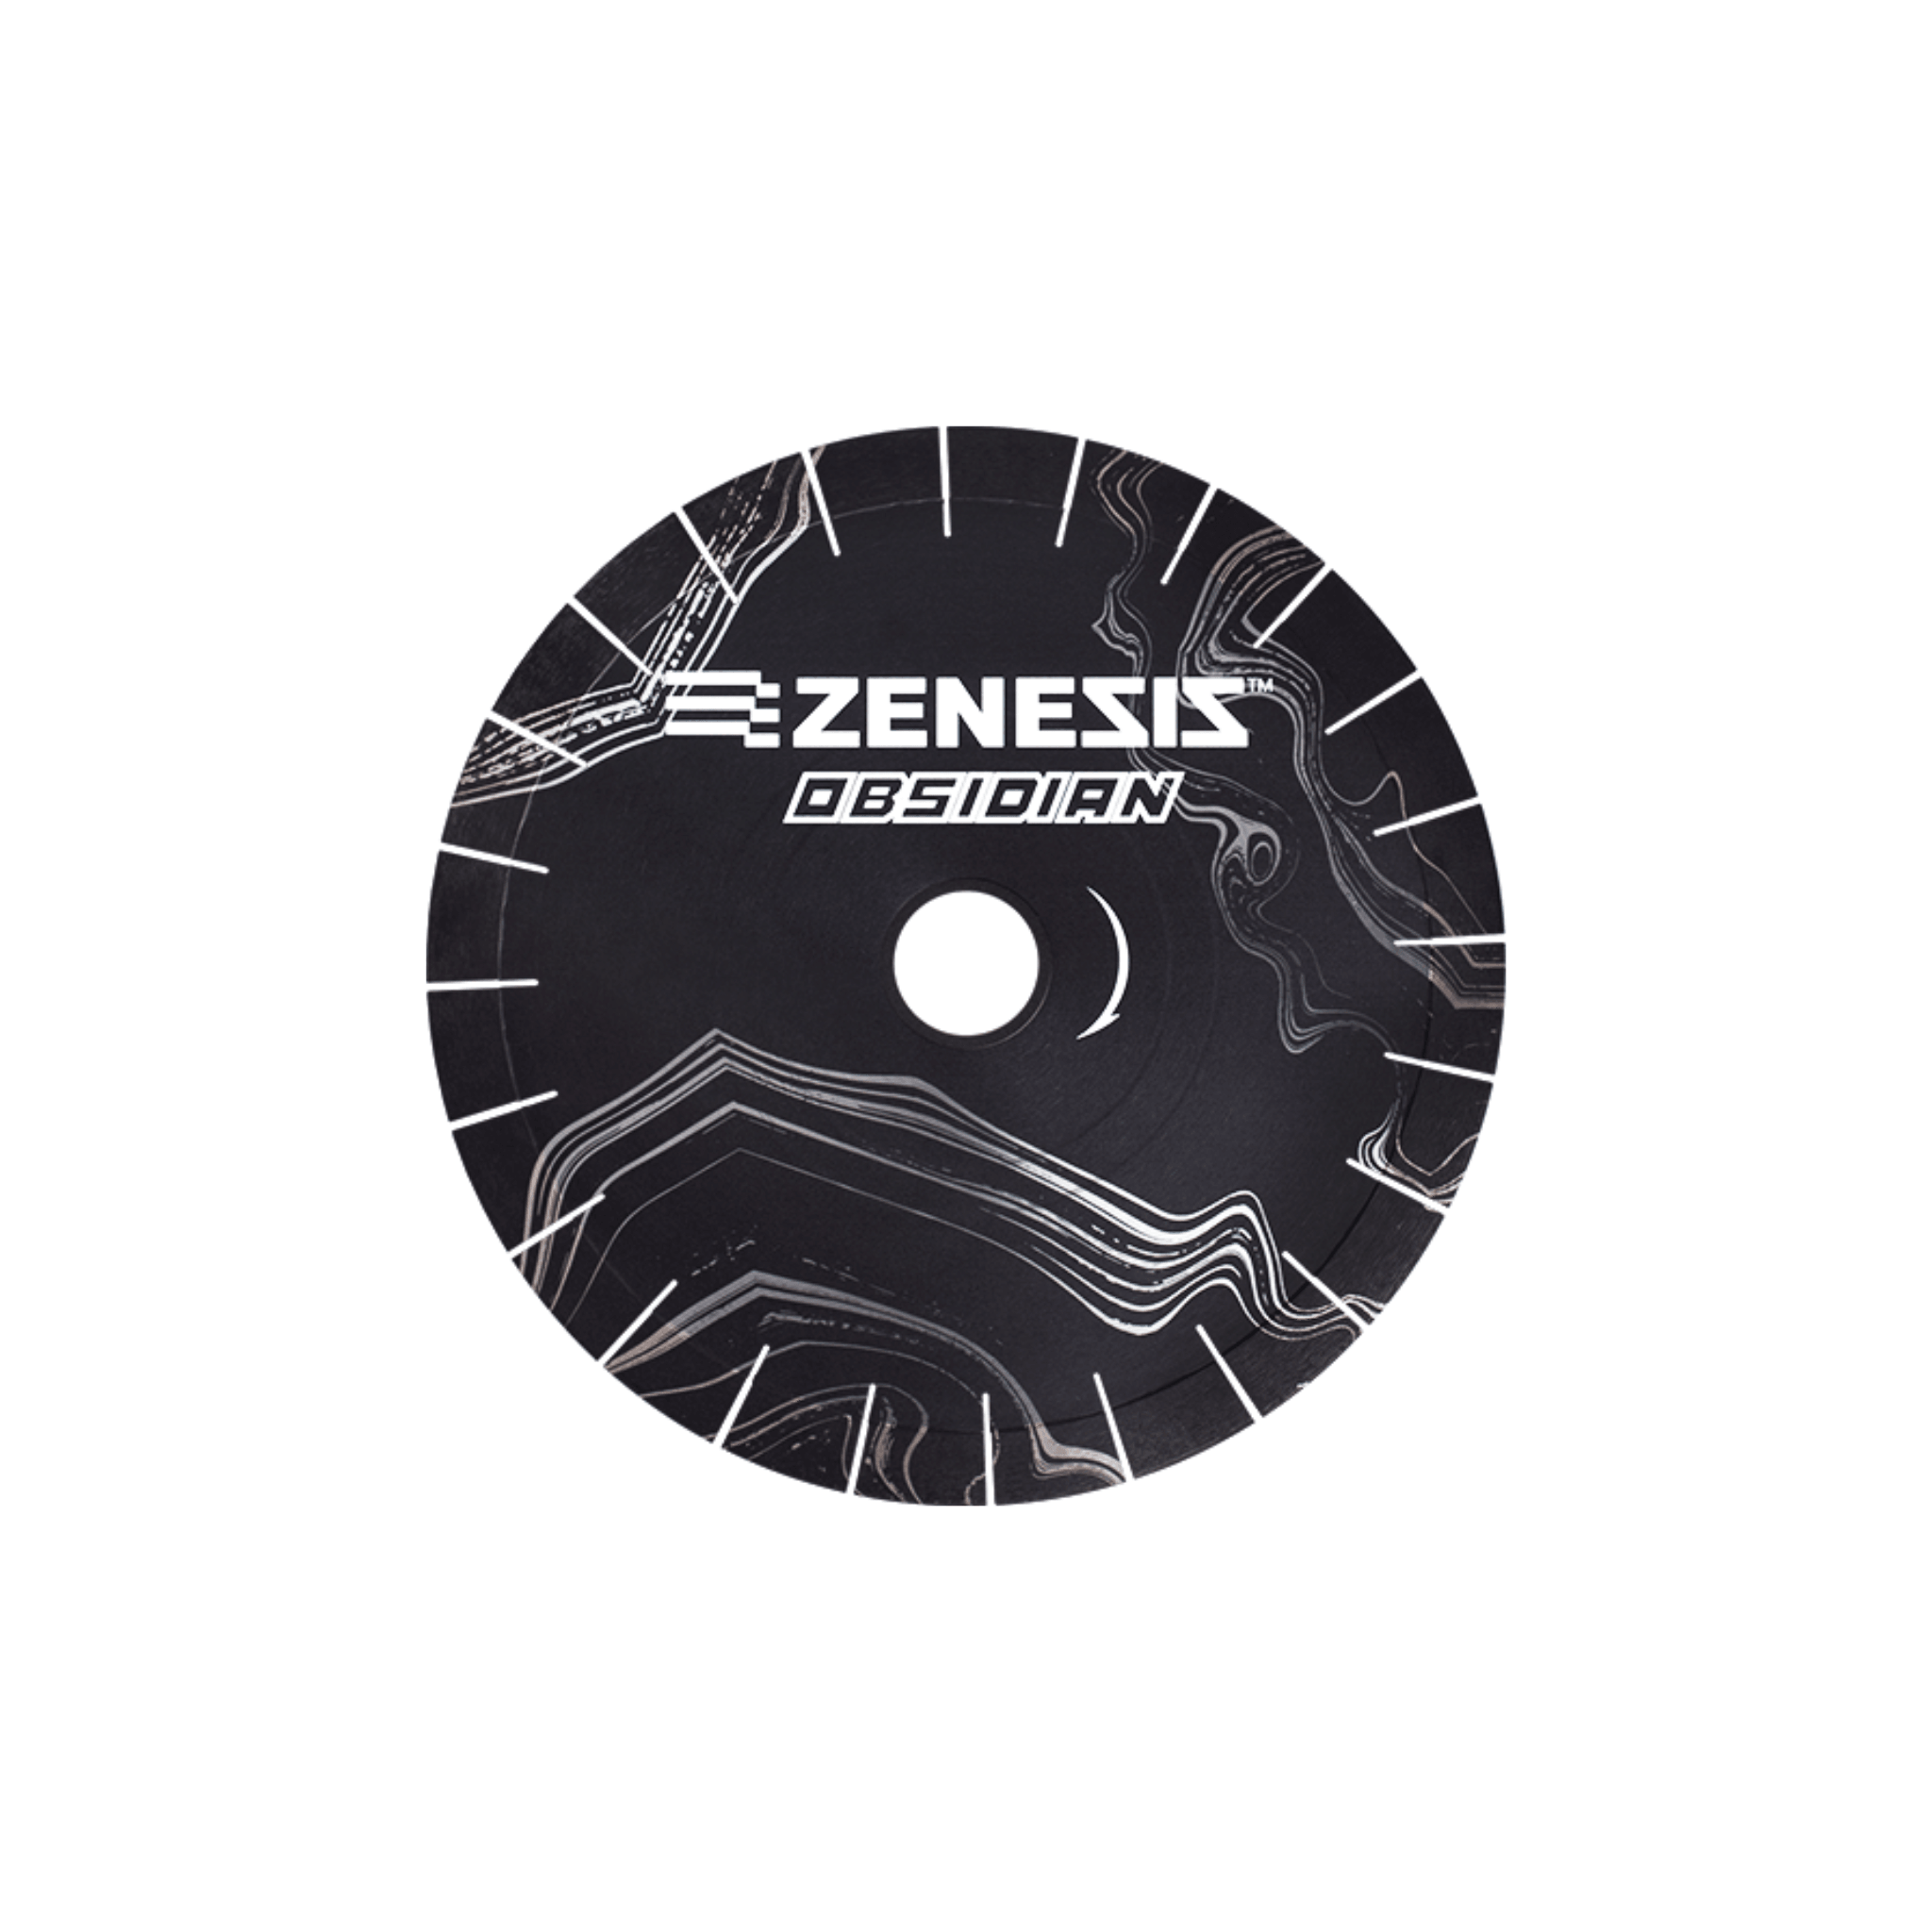 ZENESIS™ Obsidian Blade 16" - Direct Stone Tool Supply, Inc